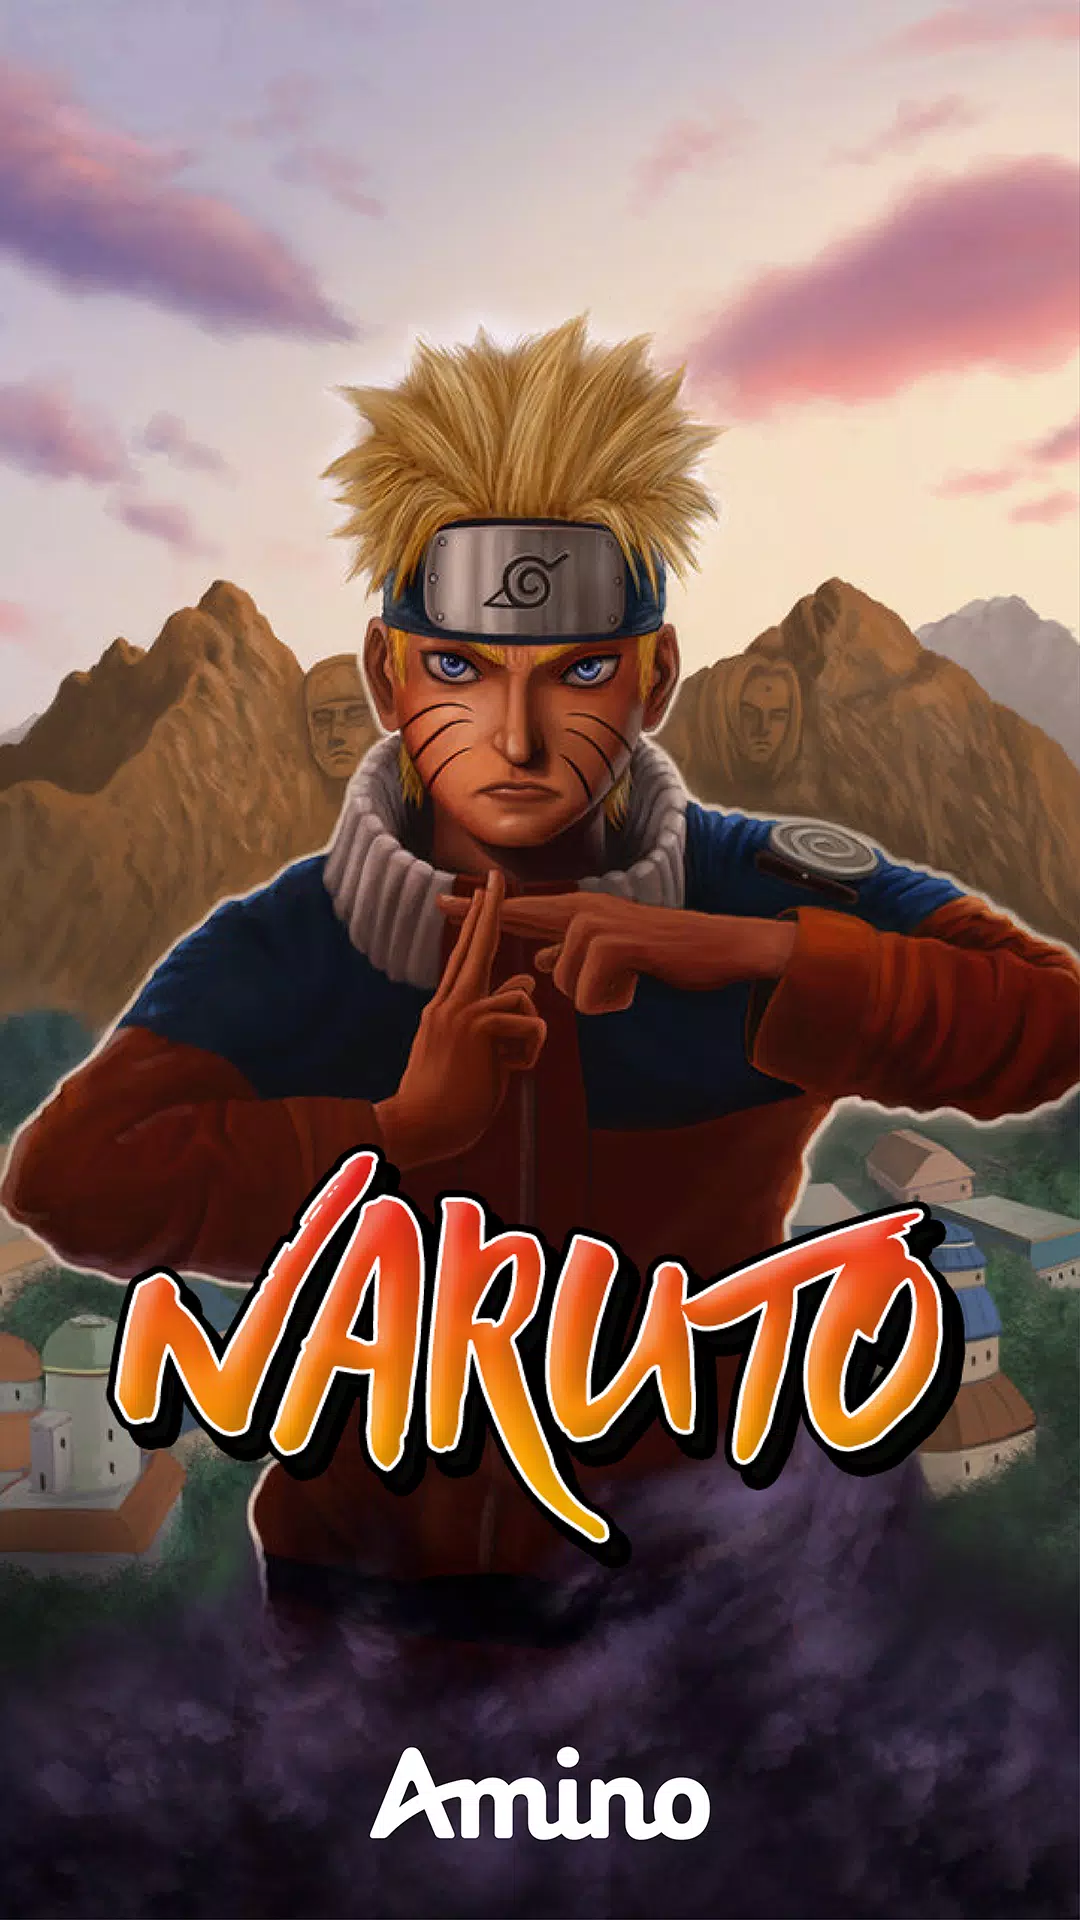 Jutsu Amino: Naruto Shippuden APK for Android Download